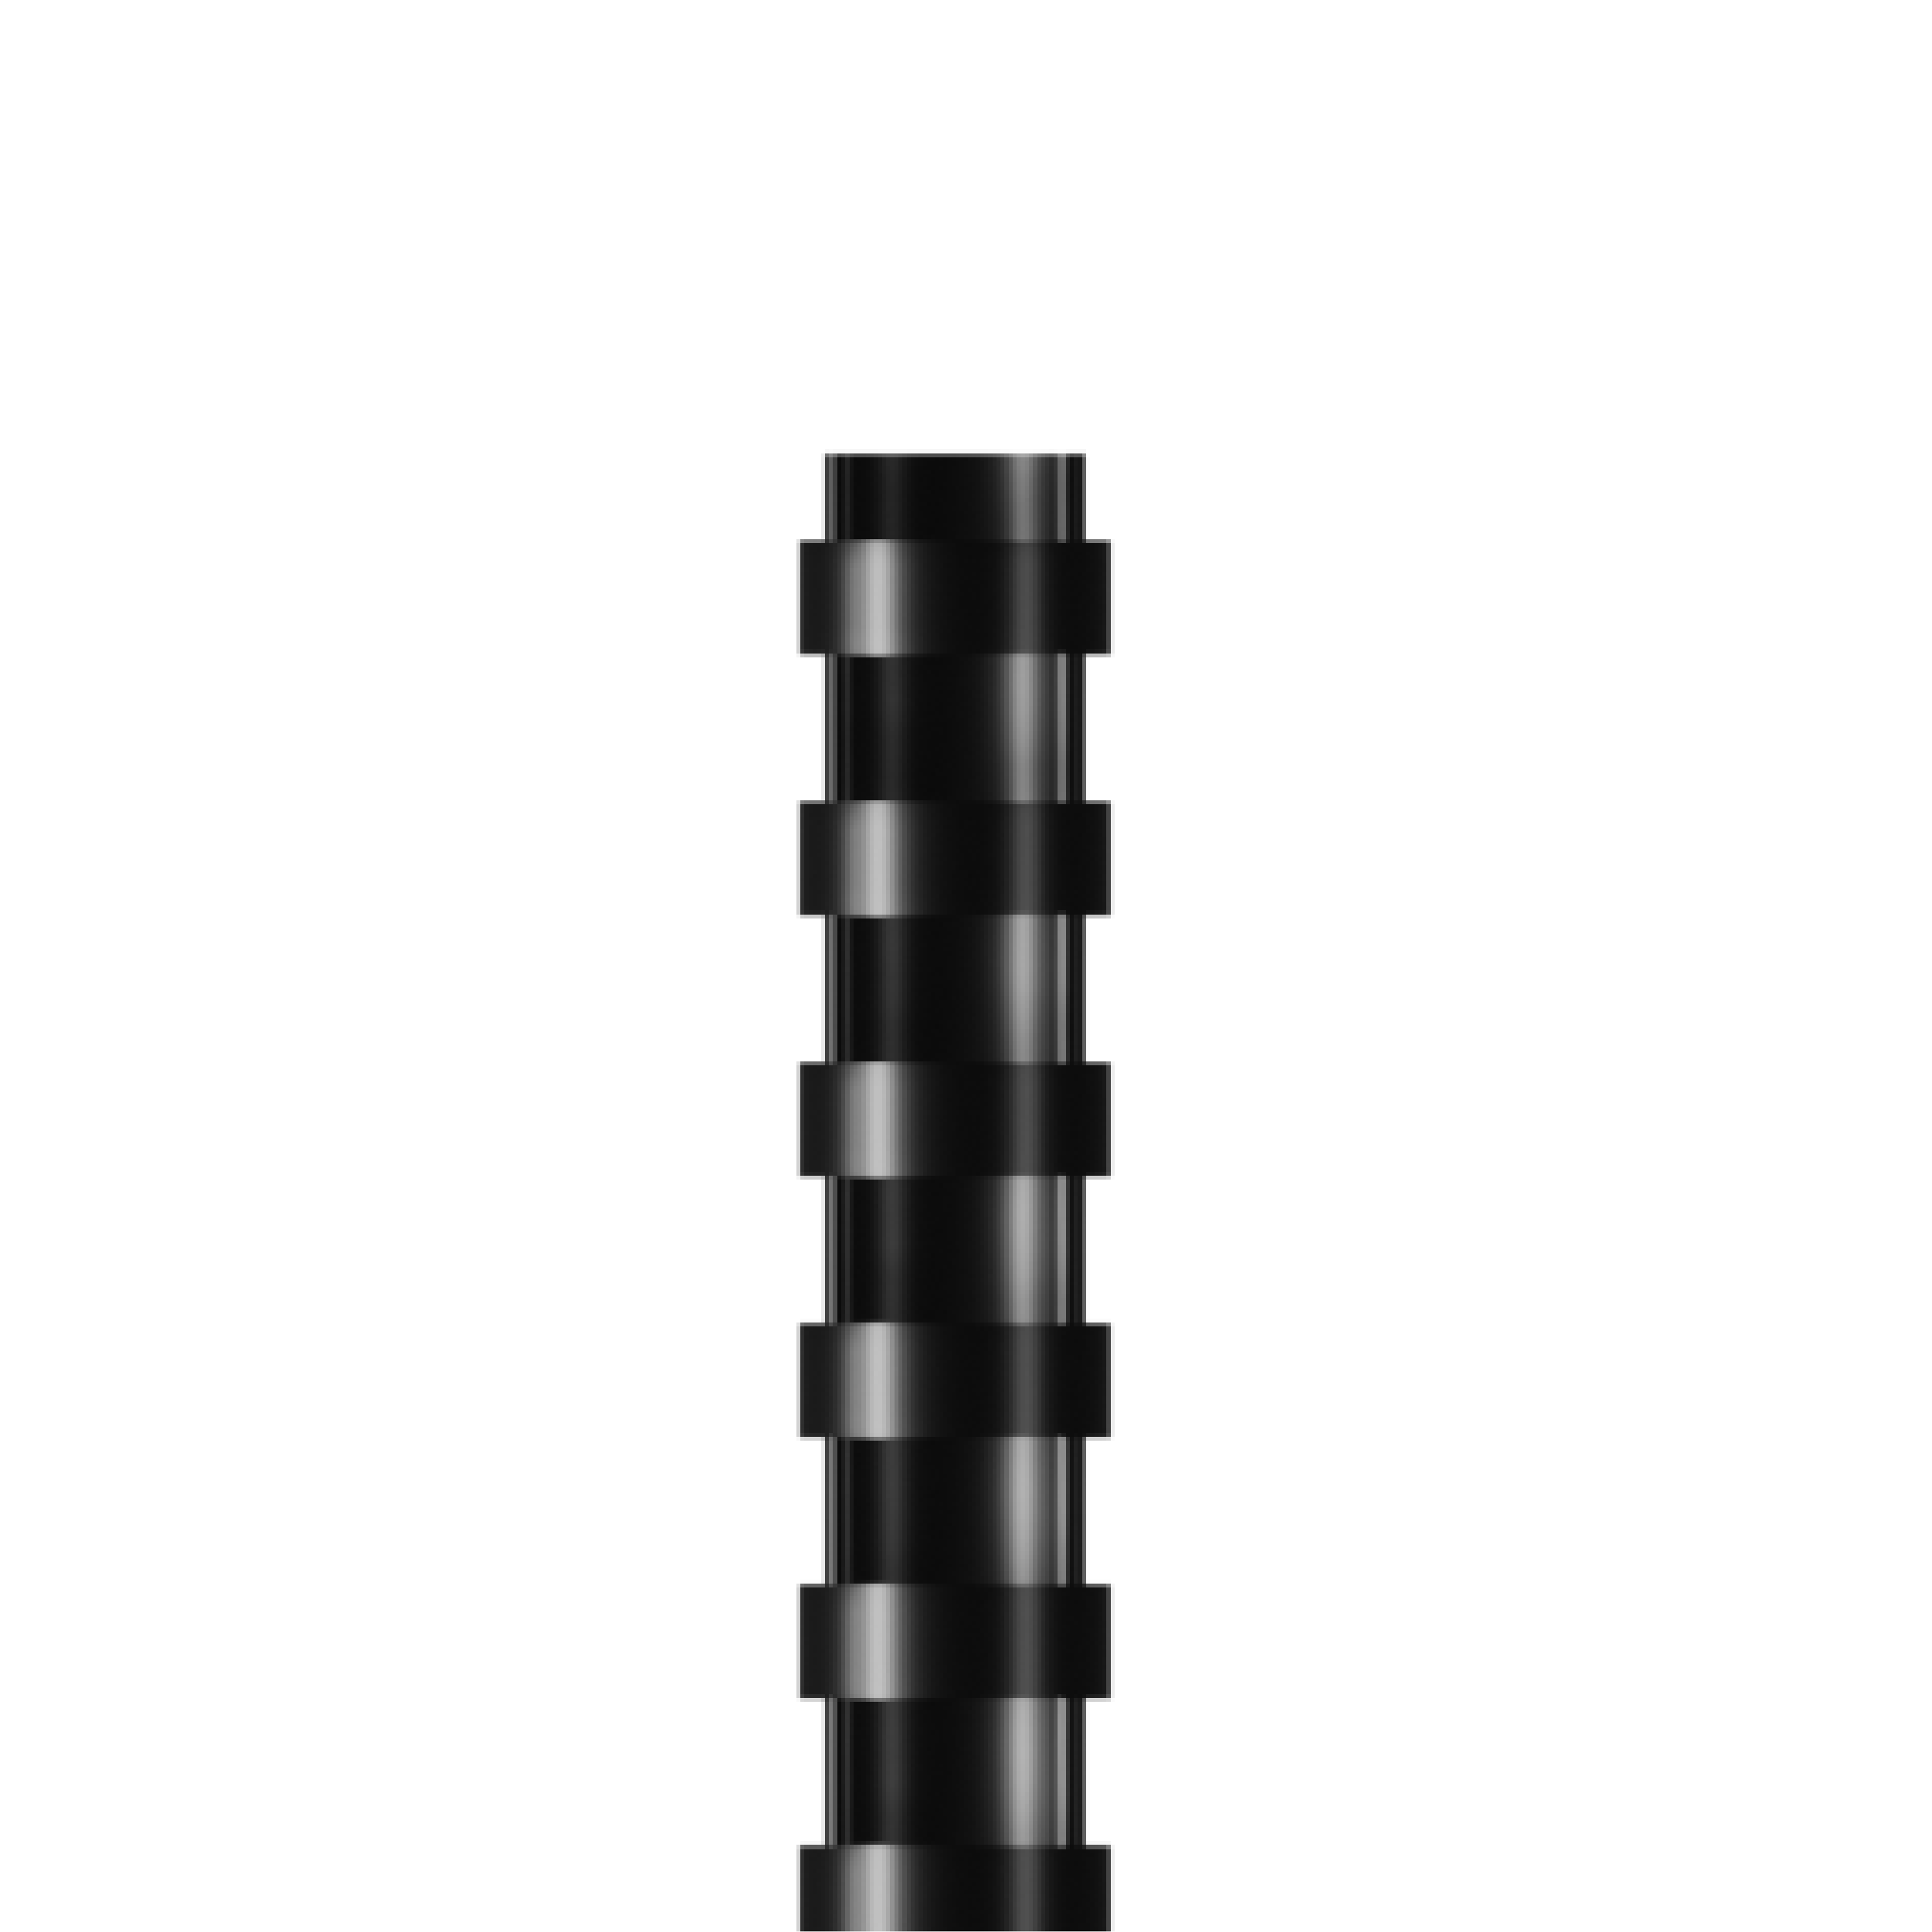 RAADO 16mm Plastic Spiral Binding Comb, Black